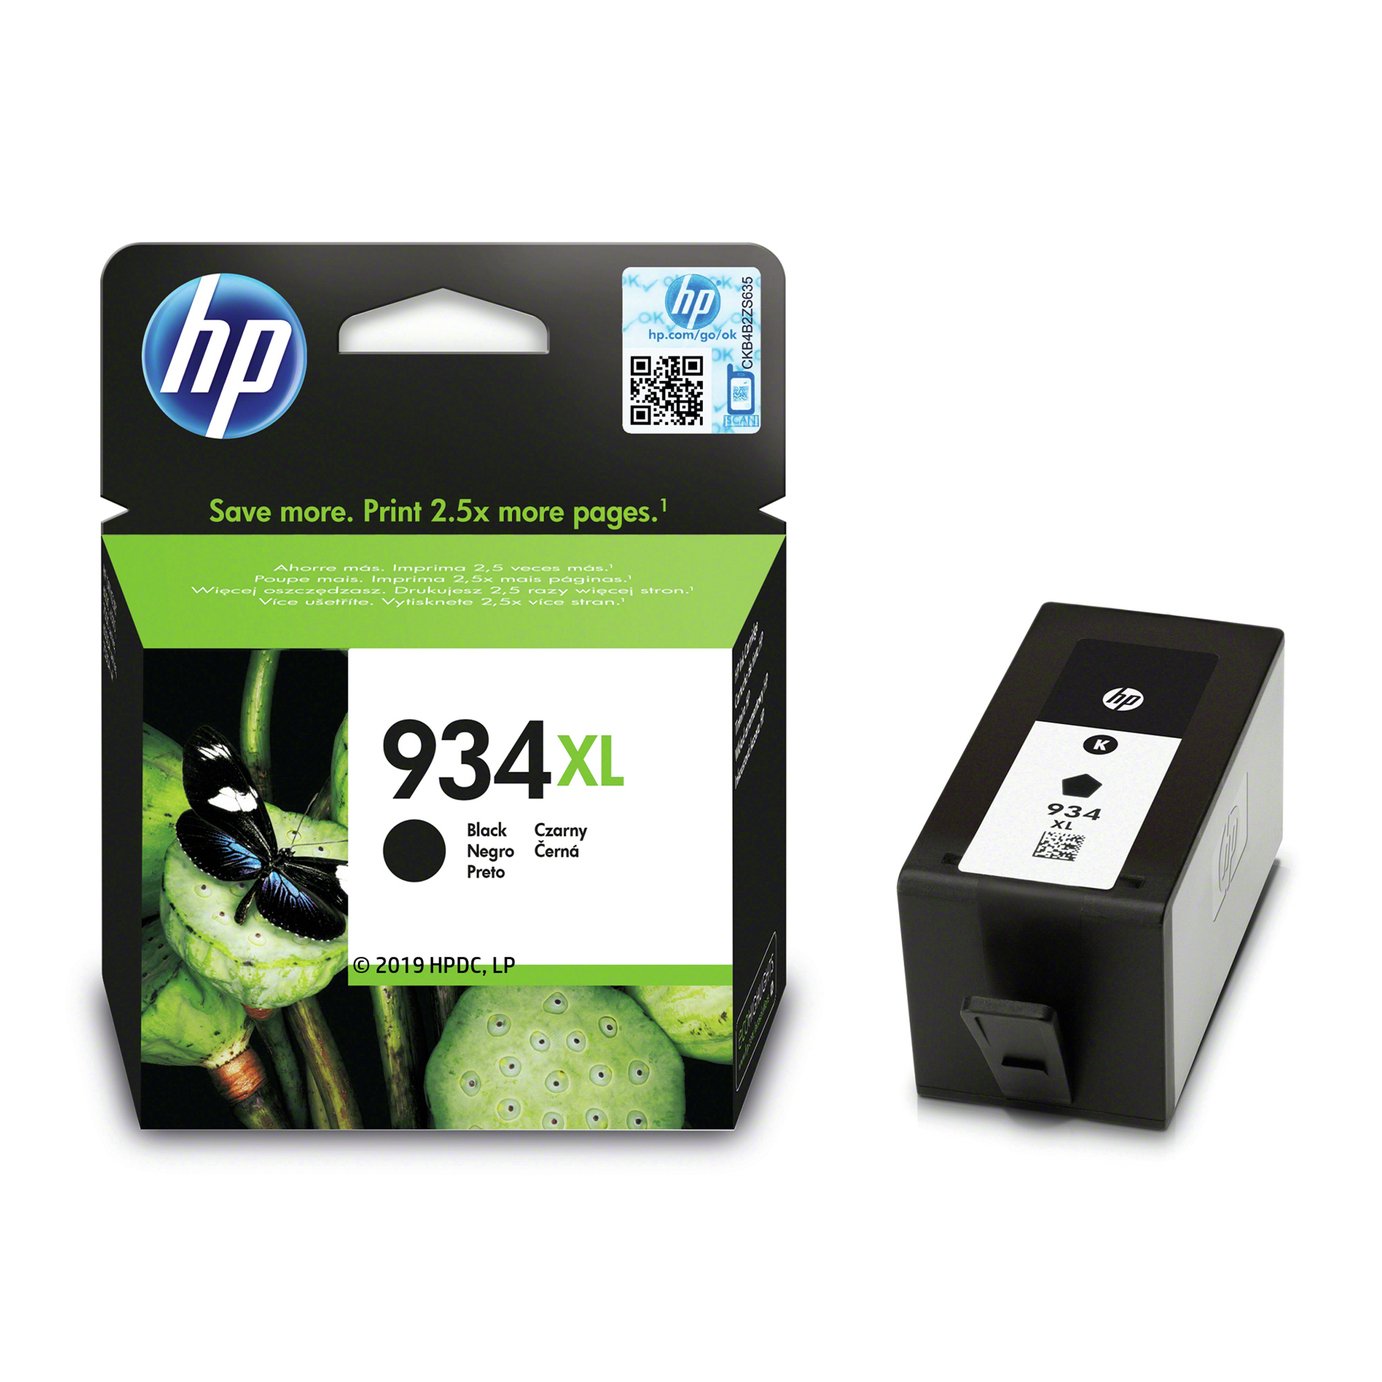 HP 934 XL High Yield Original Ink Cartridge Review